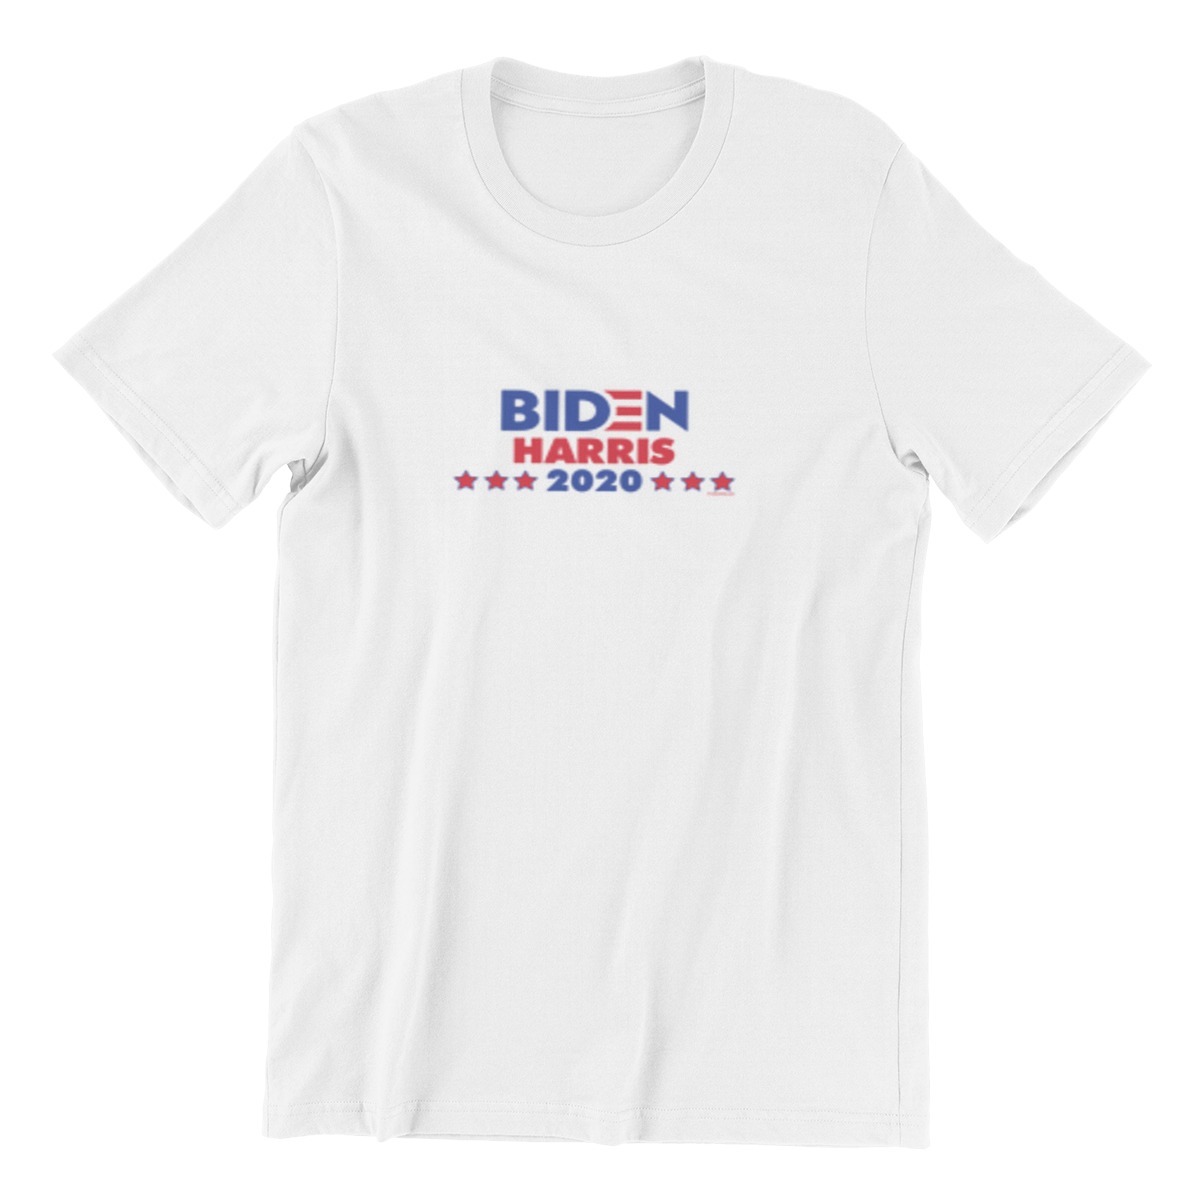 atinfor 3 Biden Harris Men's T Shirt Novelty Tops Bitumen Bike Life Tees Clothes Cotton Printed T-Shirt Plus Size